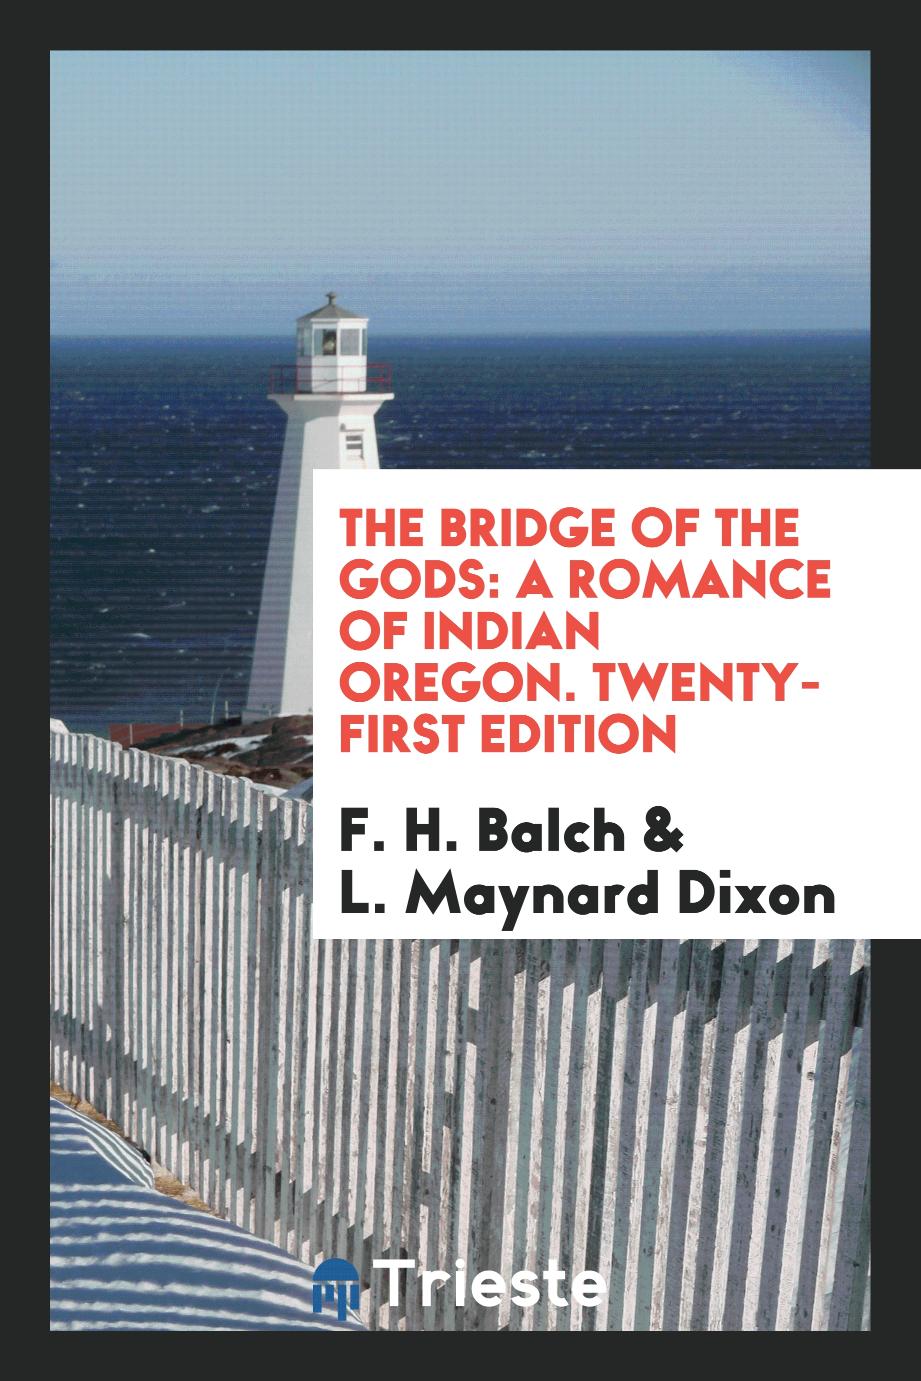 The Bridge of the Gods: A Romance of Indian Oregon. Twenty-First Edition